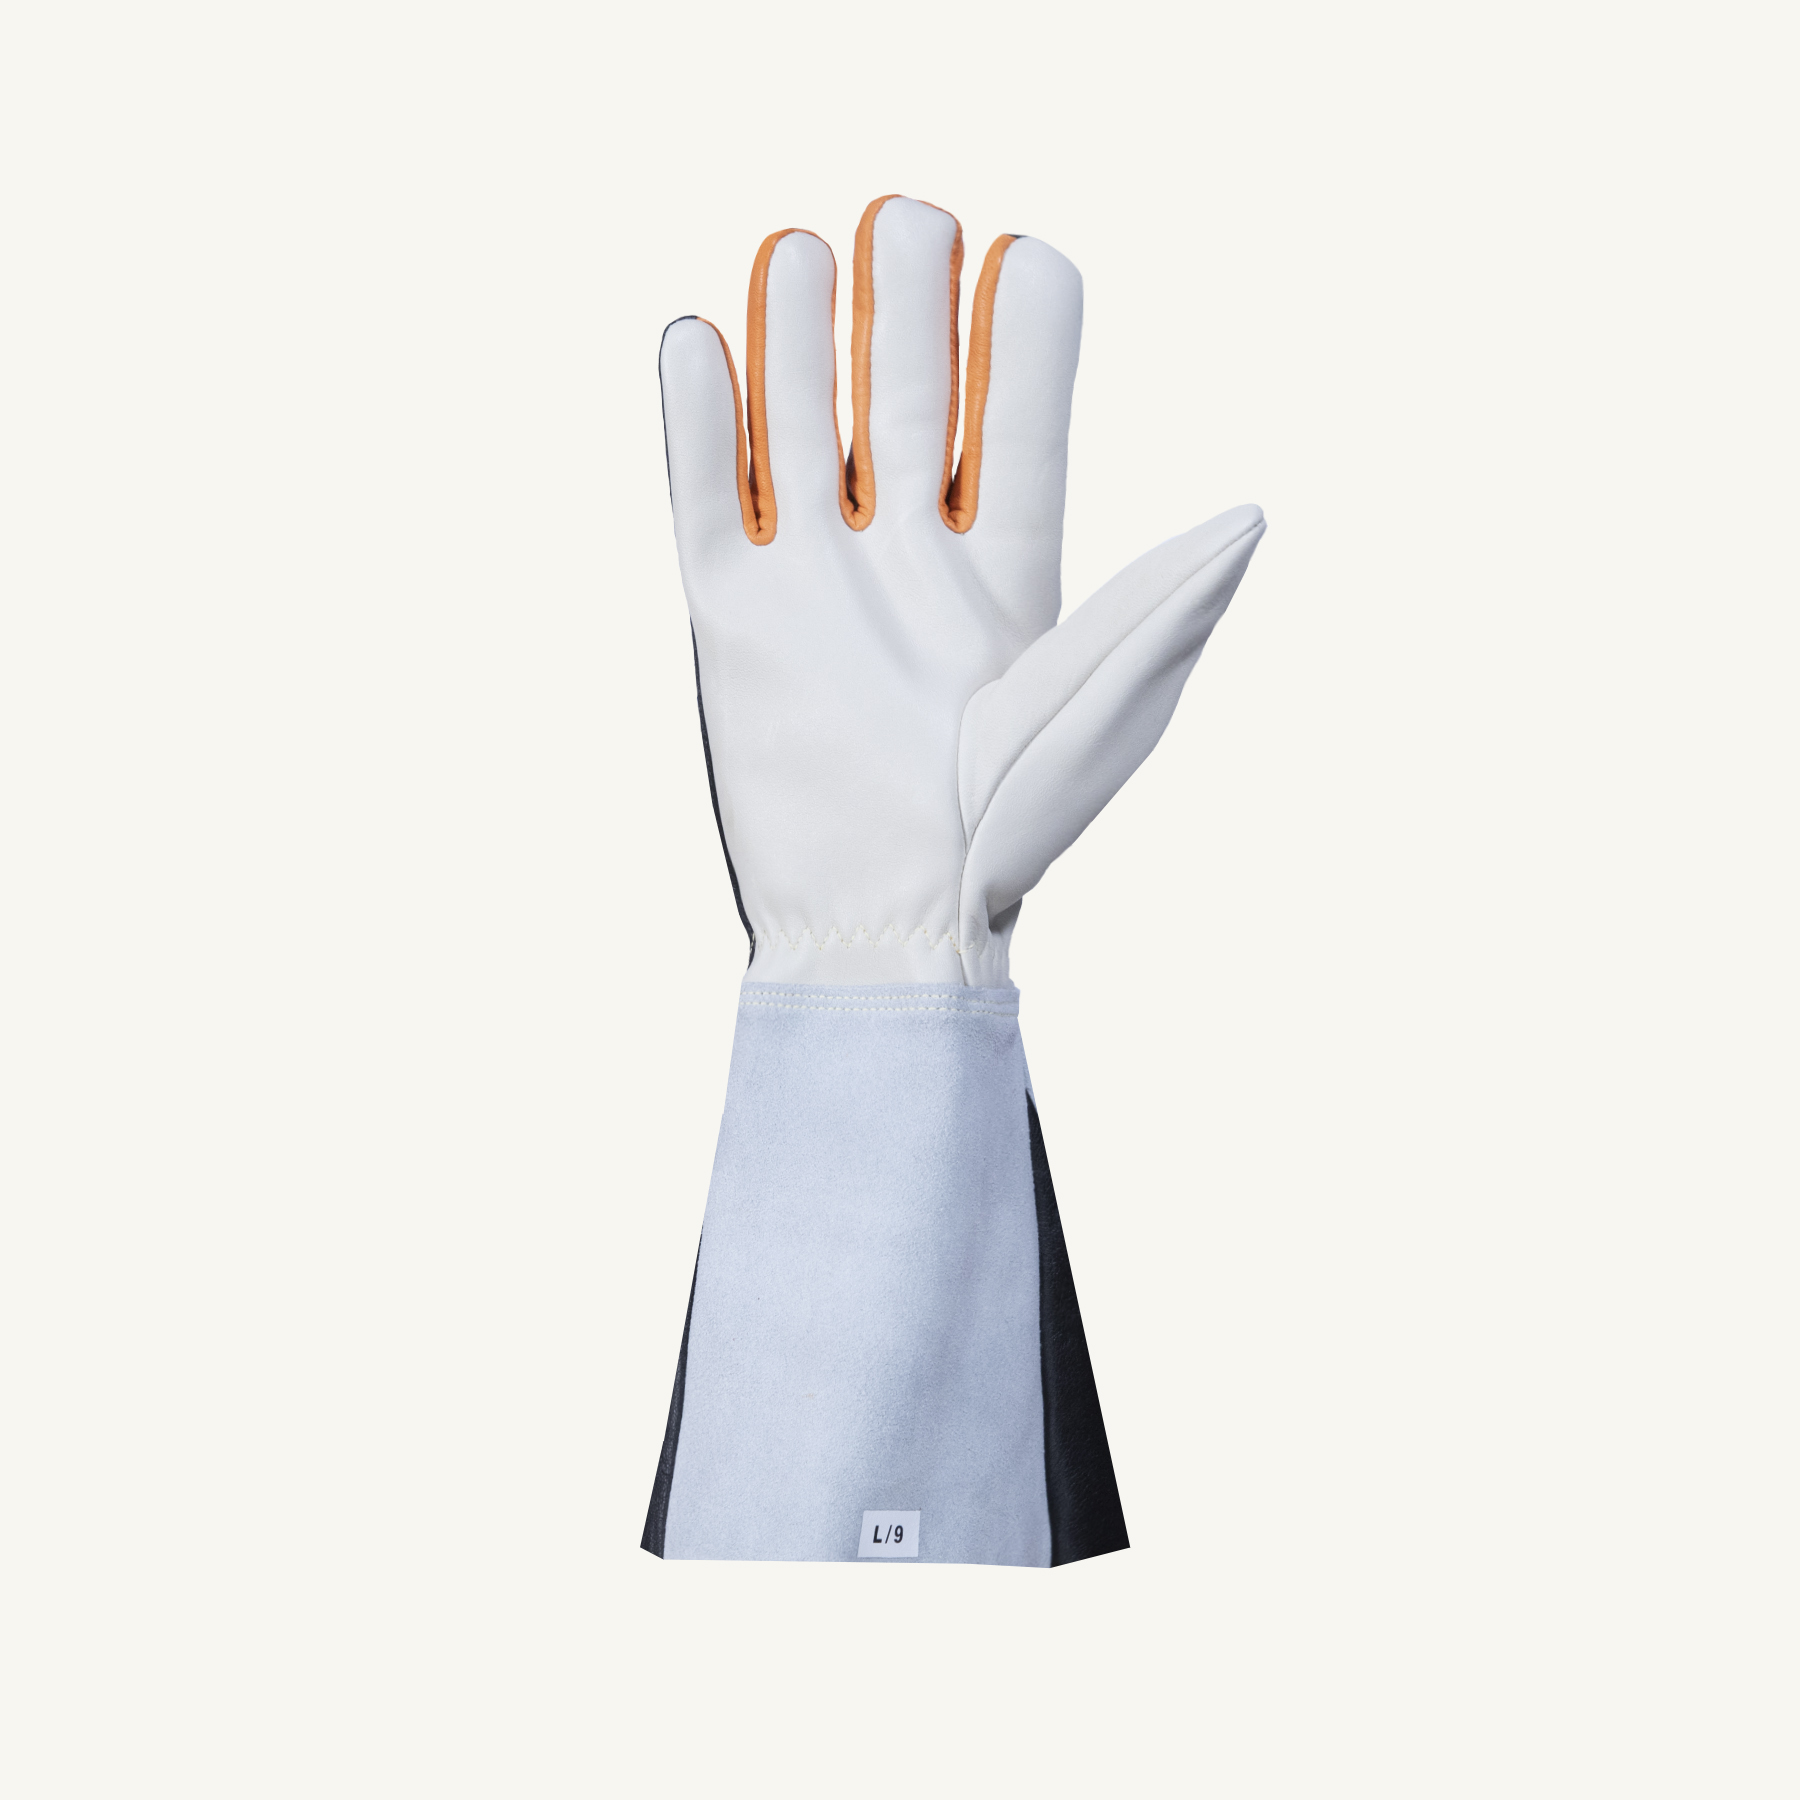 Superior Glove® Endura® 398HG6 Lineman Gloves 